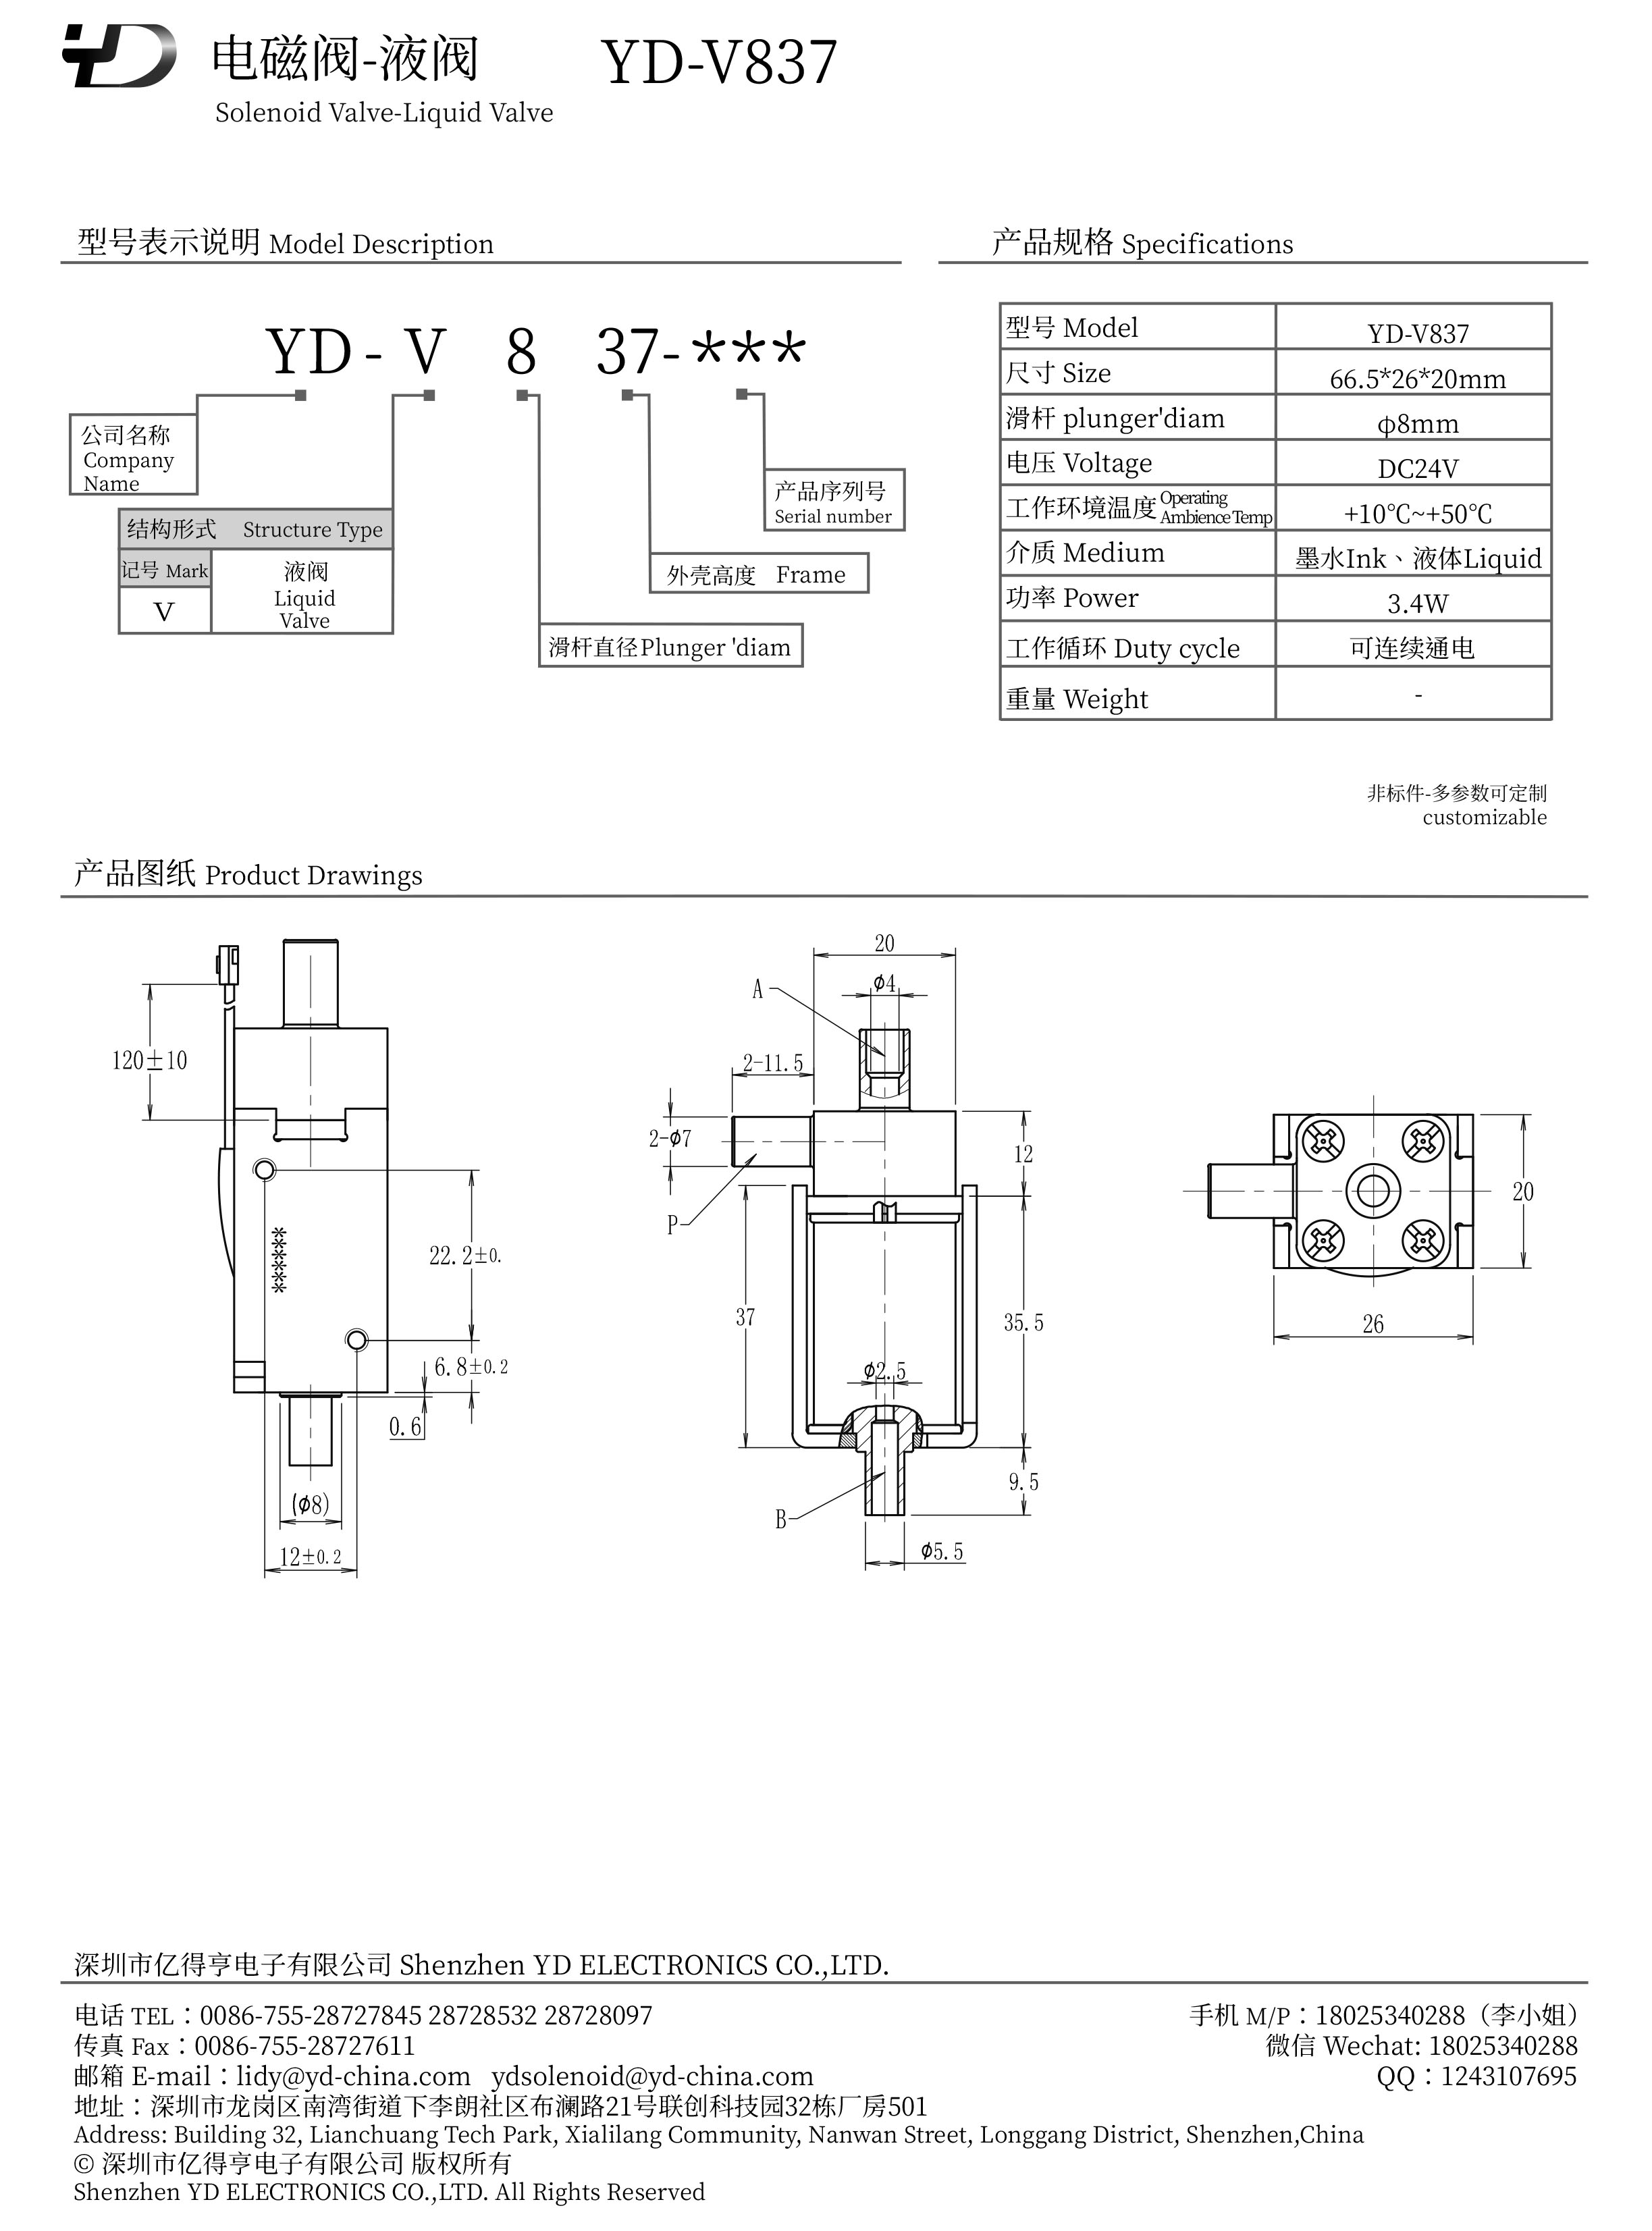 YD-V837-PDF.jpg